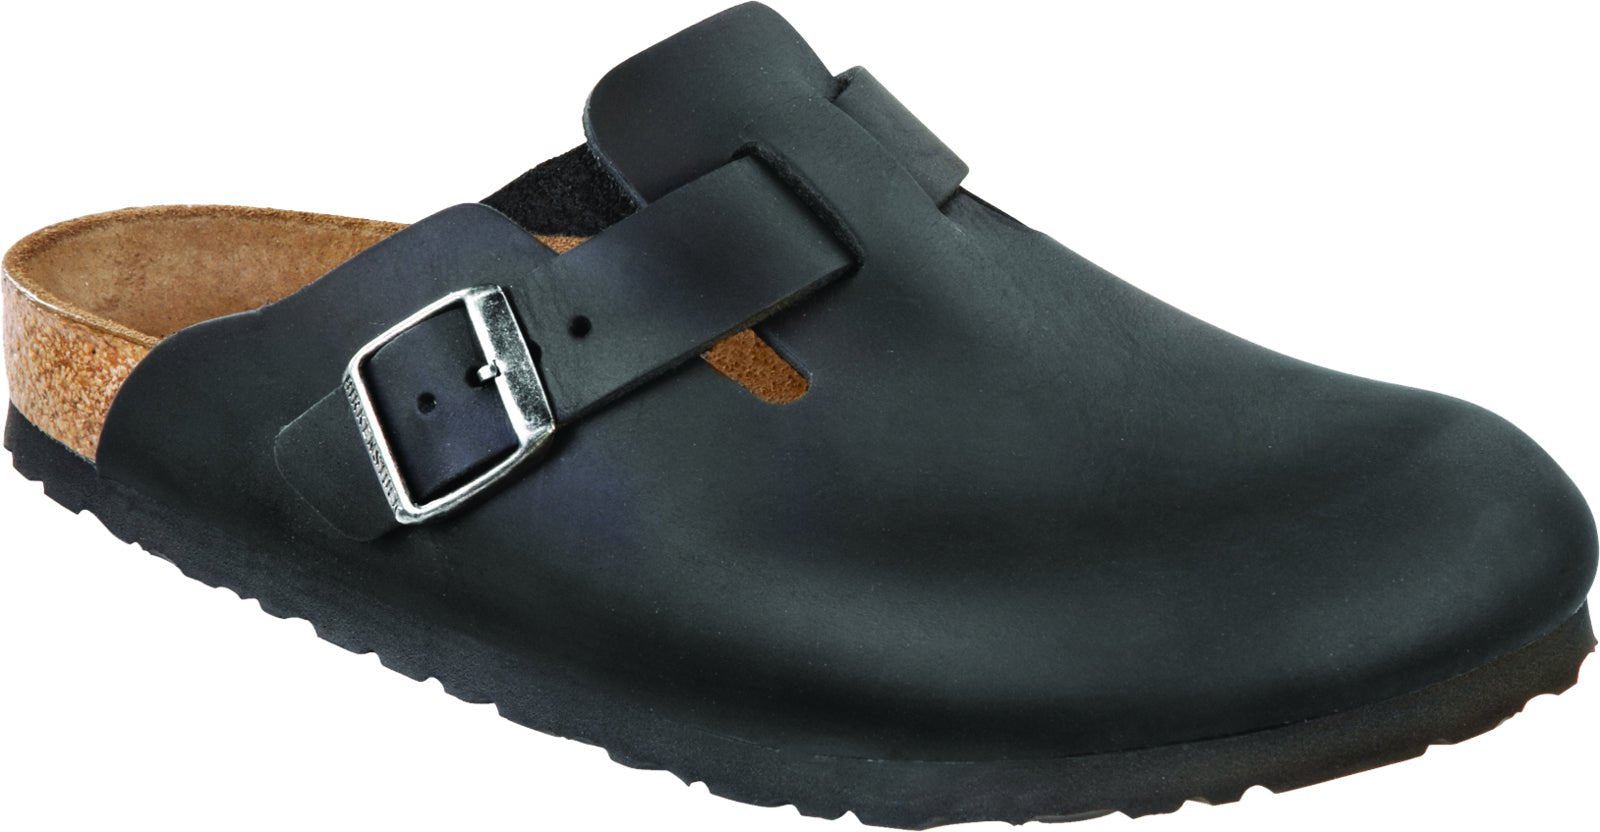 Birkenstock Boston Black Oiled Leather Original Footbed - Grady’s Feet Essentials - Birkenstock